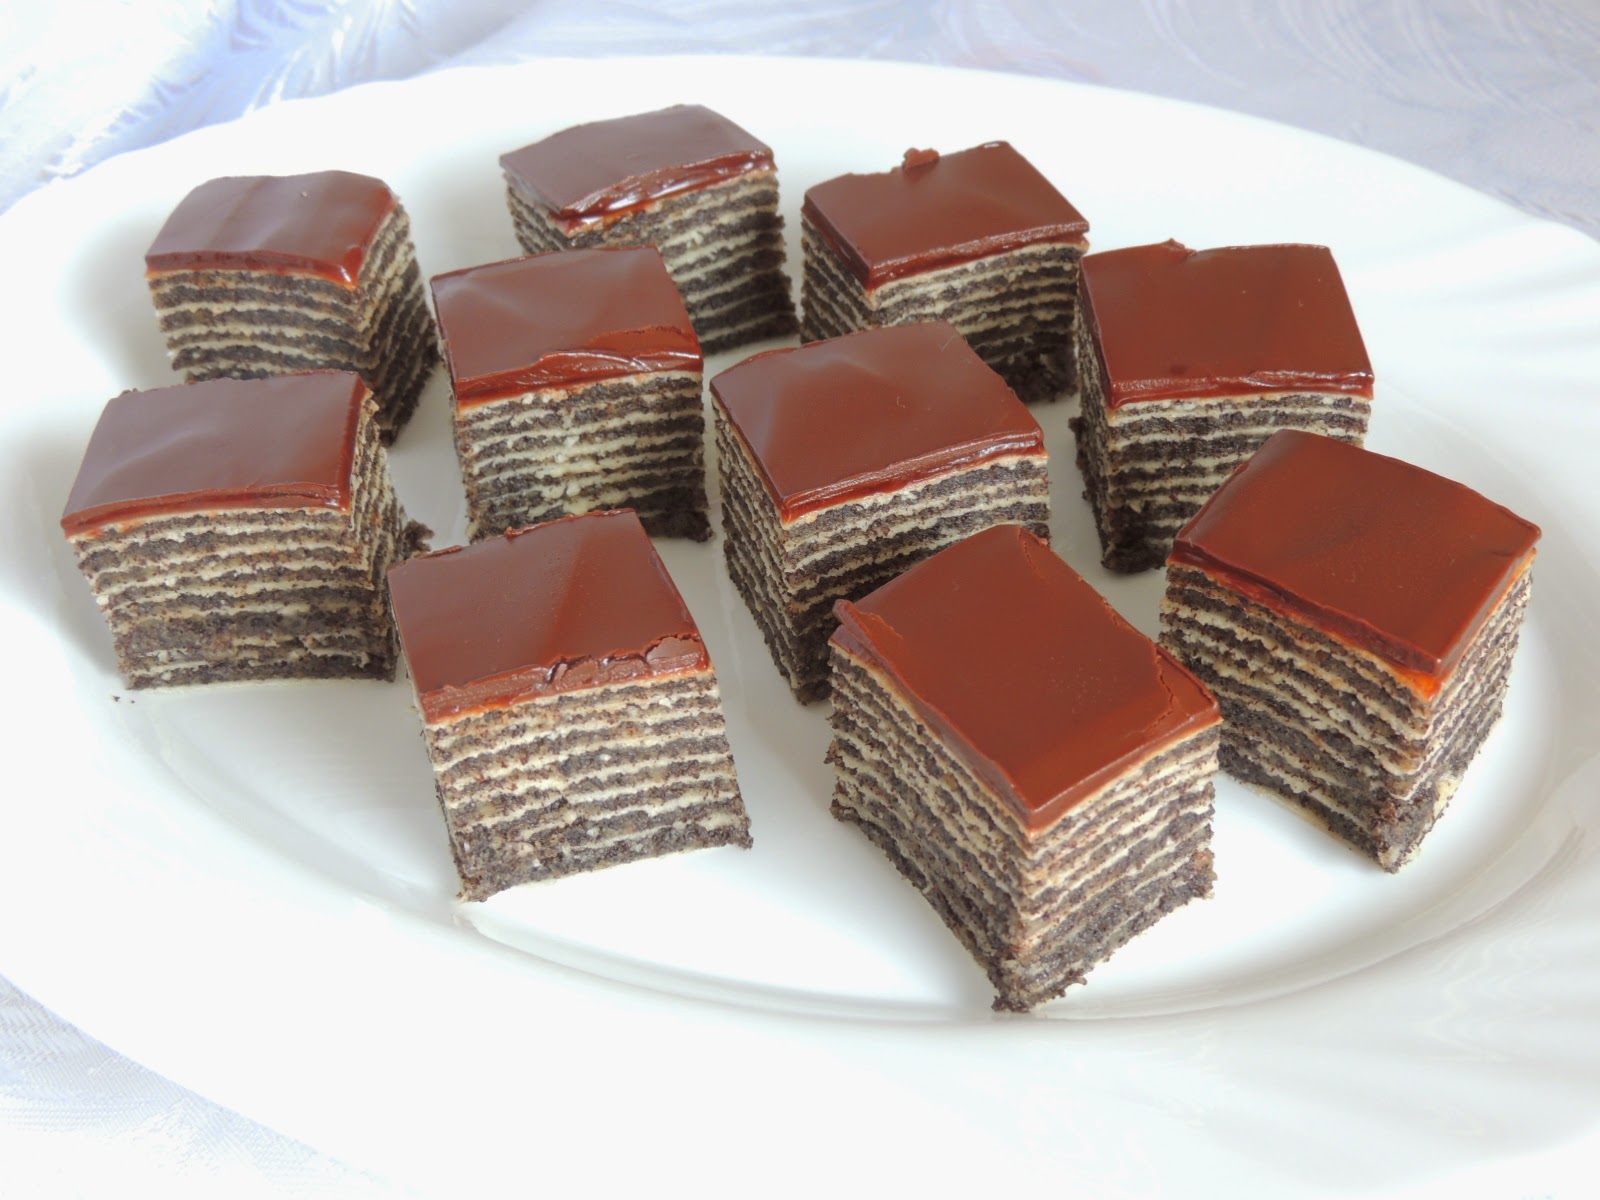 Chocolate cake with readymade barks